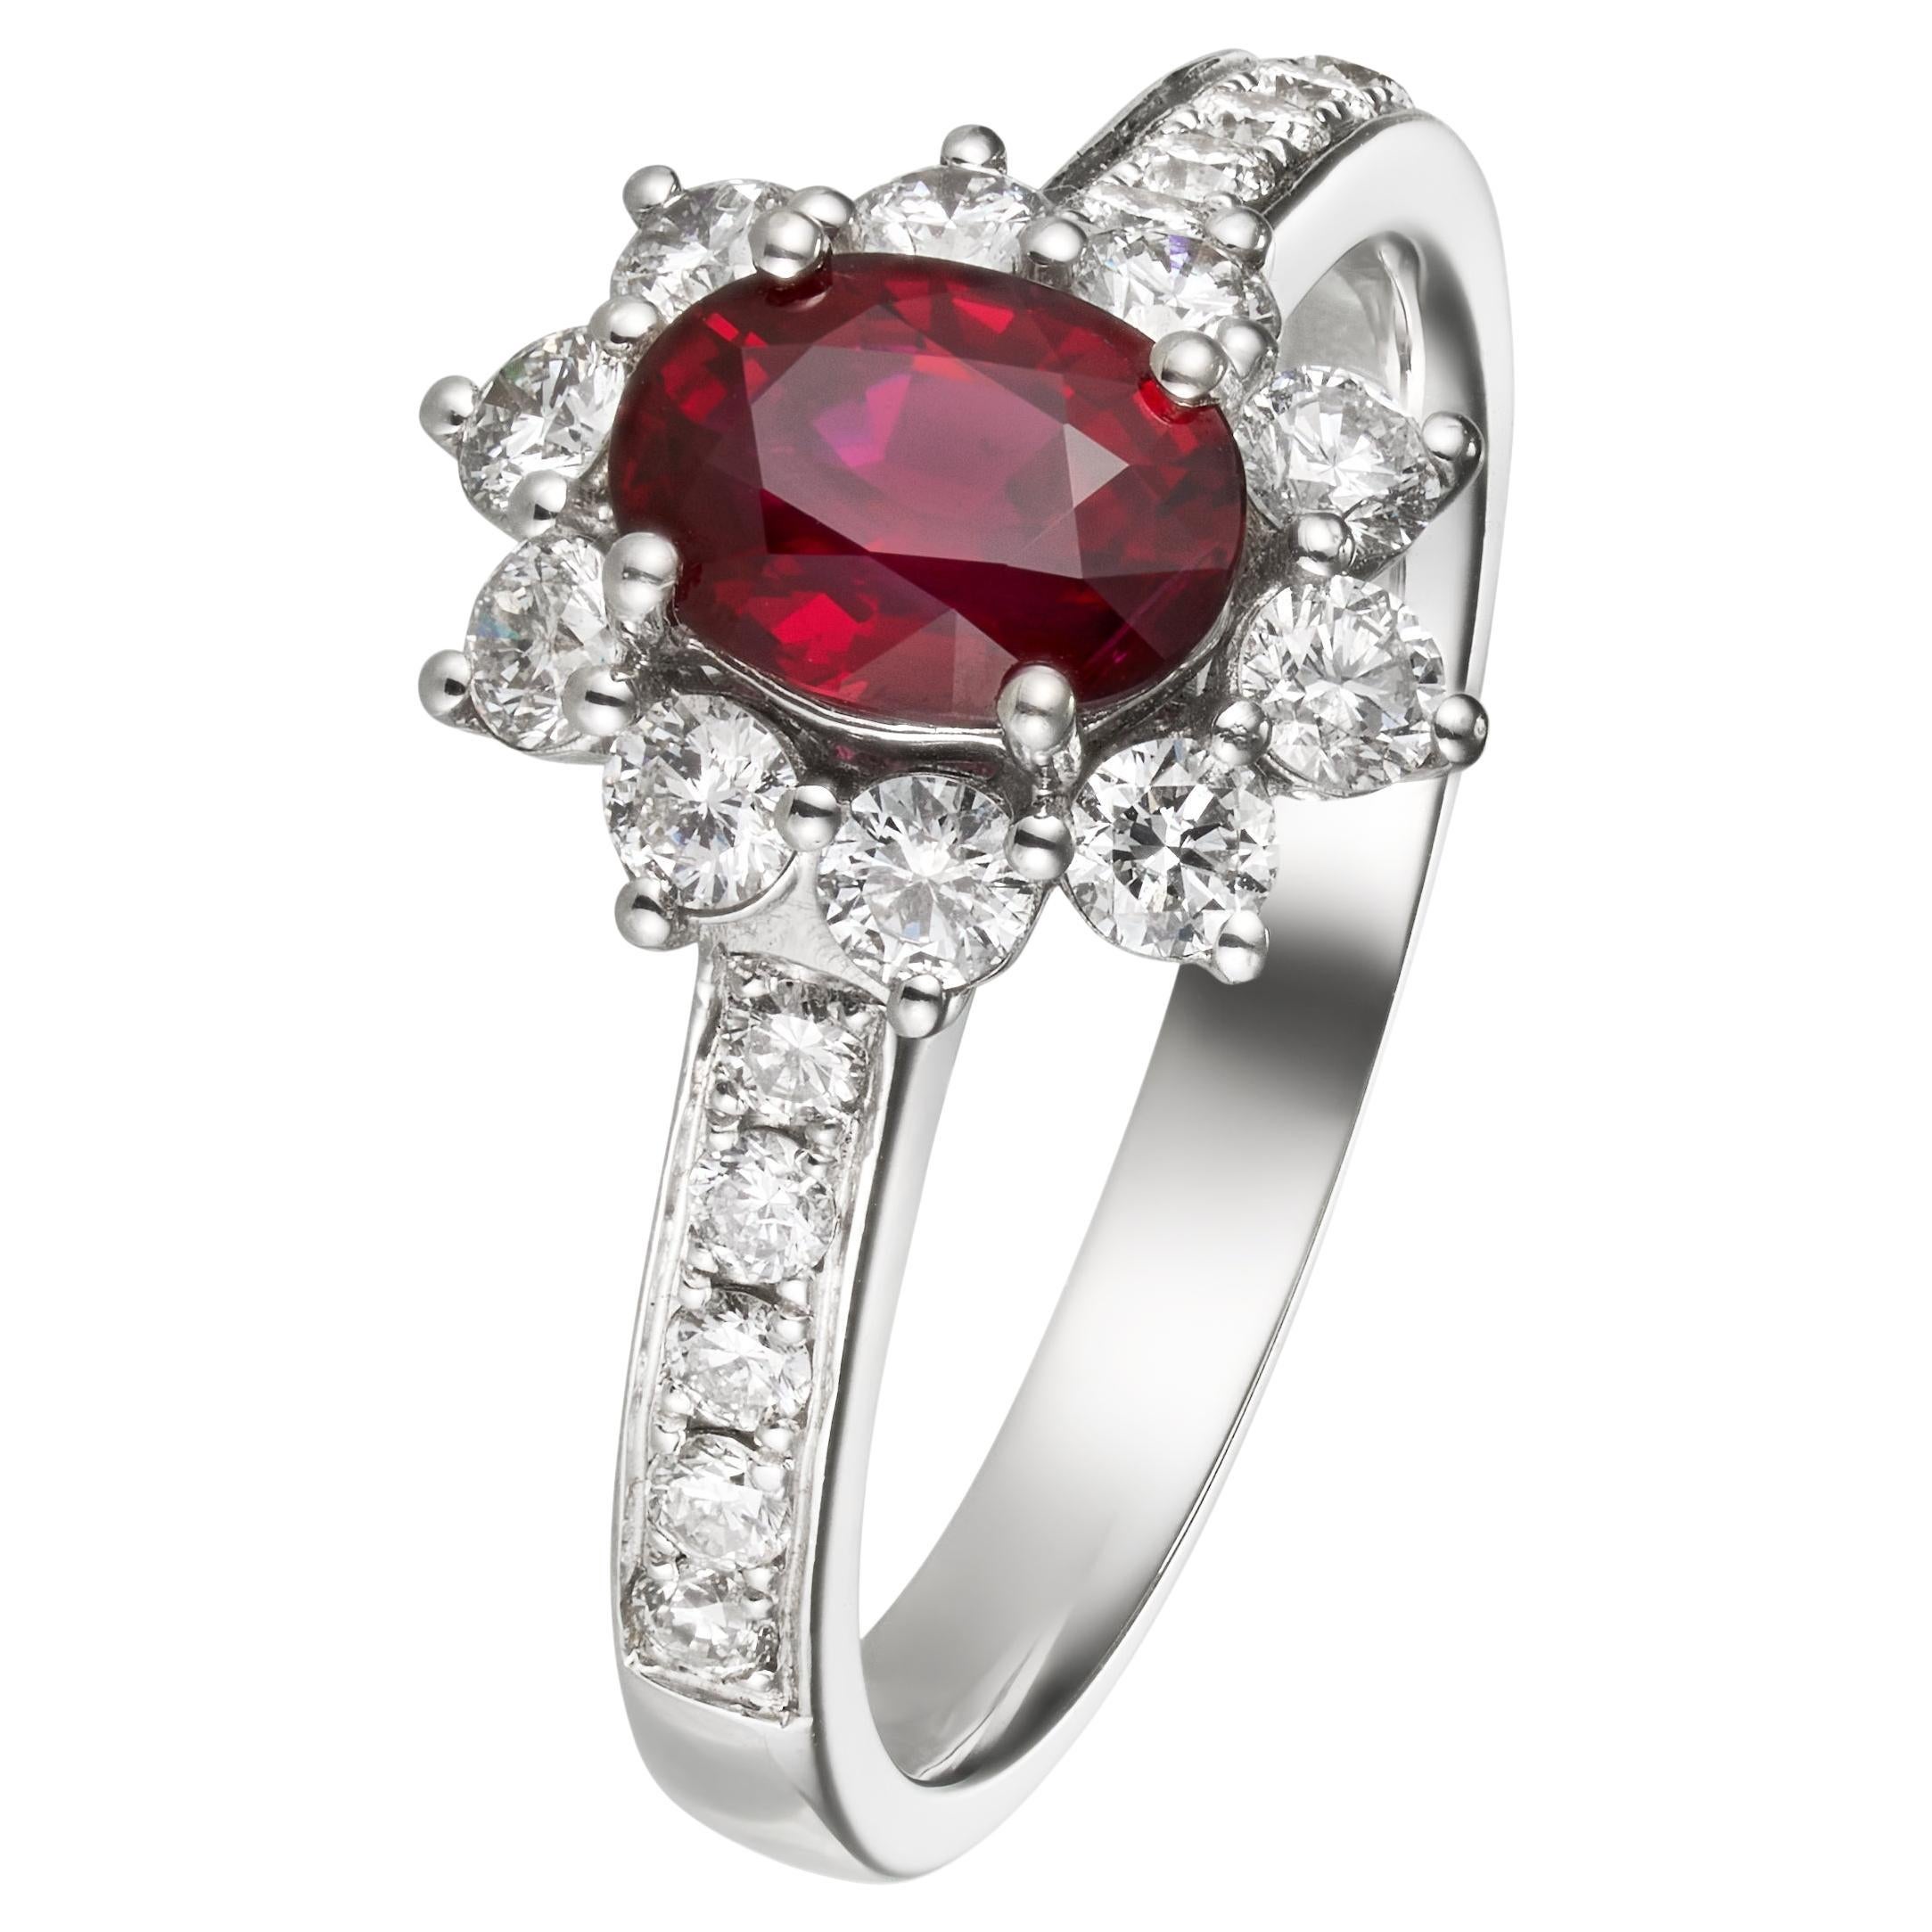 GRS Certified Natural Burmese Ruby Diamond Ring - "Pigeon Blood" Vivid Red 